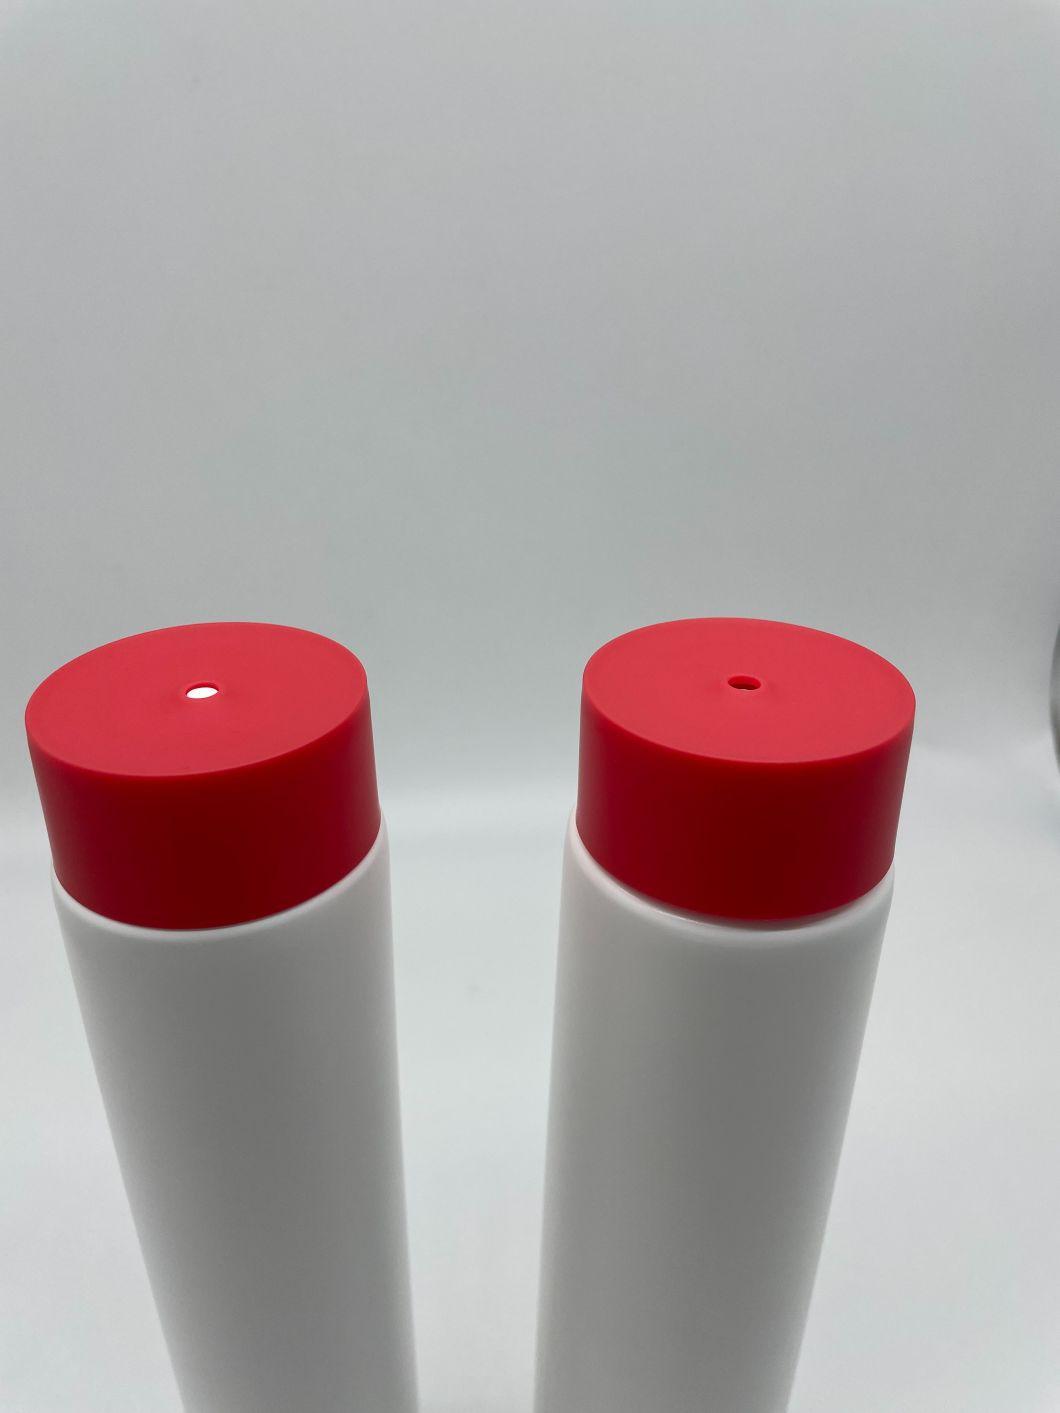 D50 Centre Dispense Plastic Tube for Body Lotion or Cream Skin Care Packaging